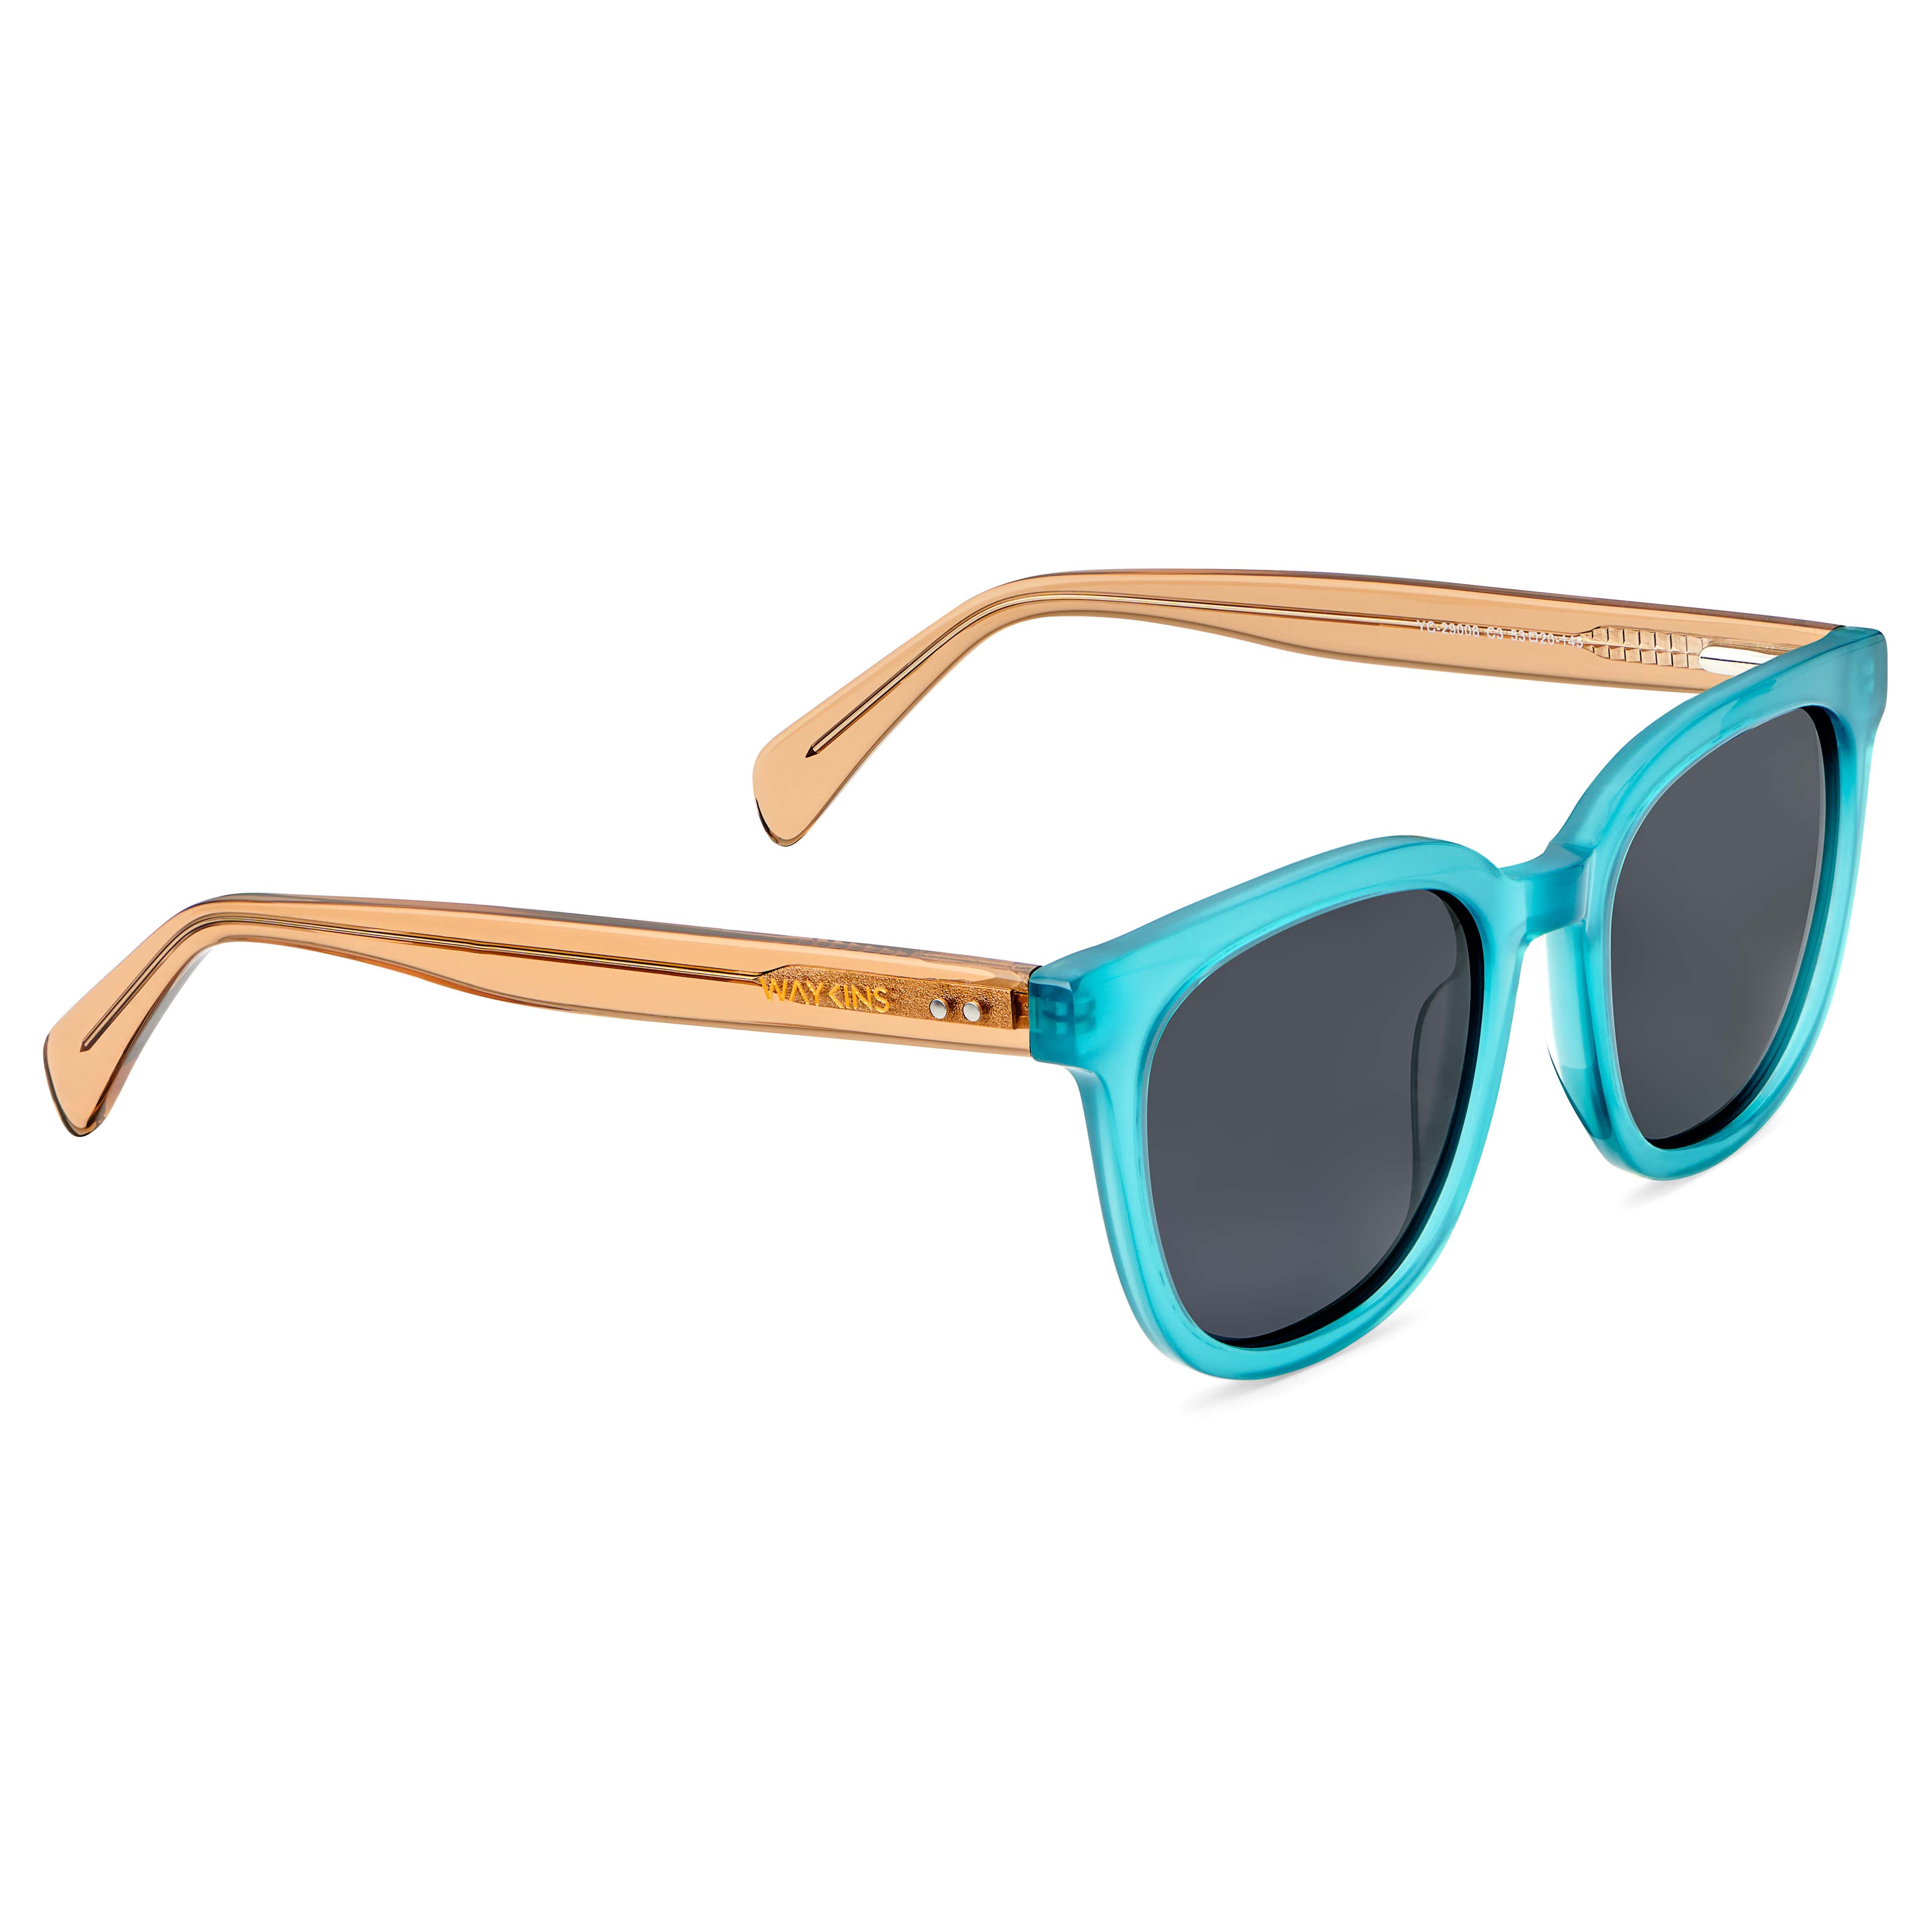 Blue & Brown Semi-transparent Polarised Sunglasses - 6 - gallery